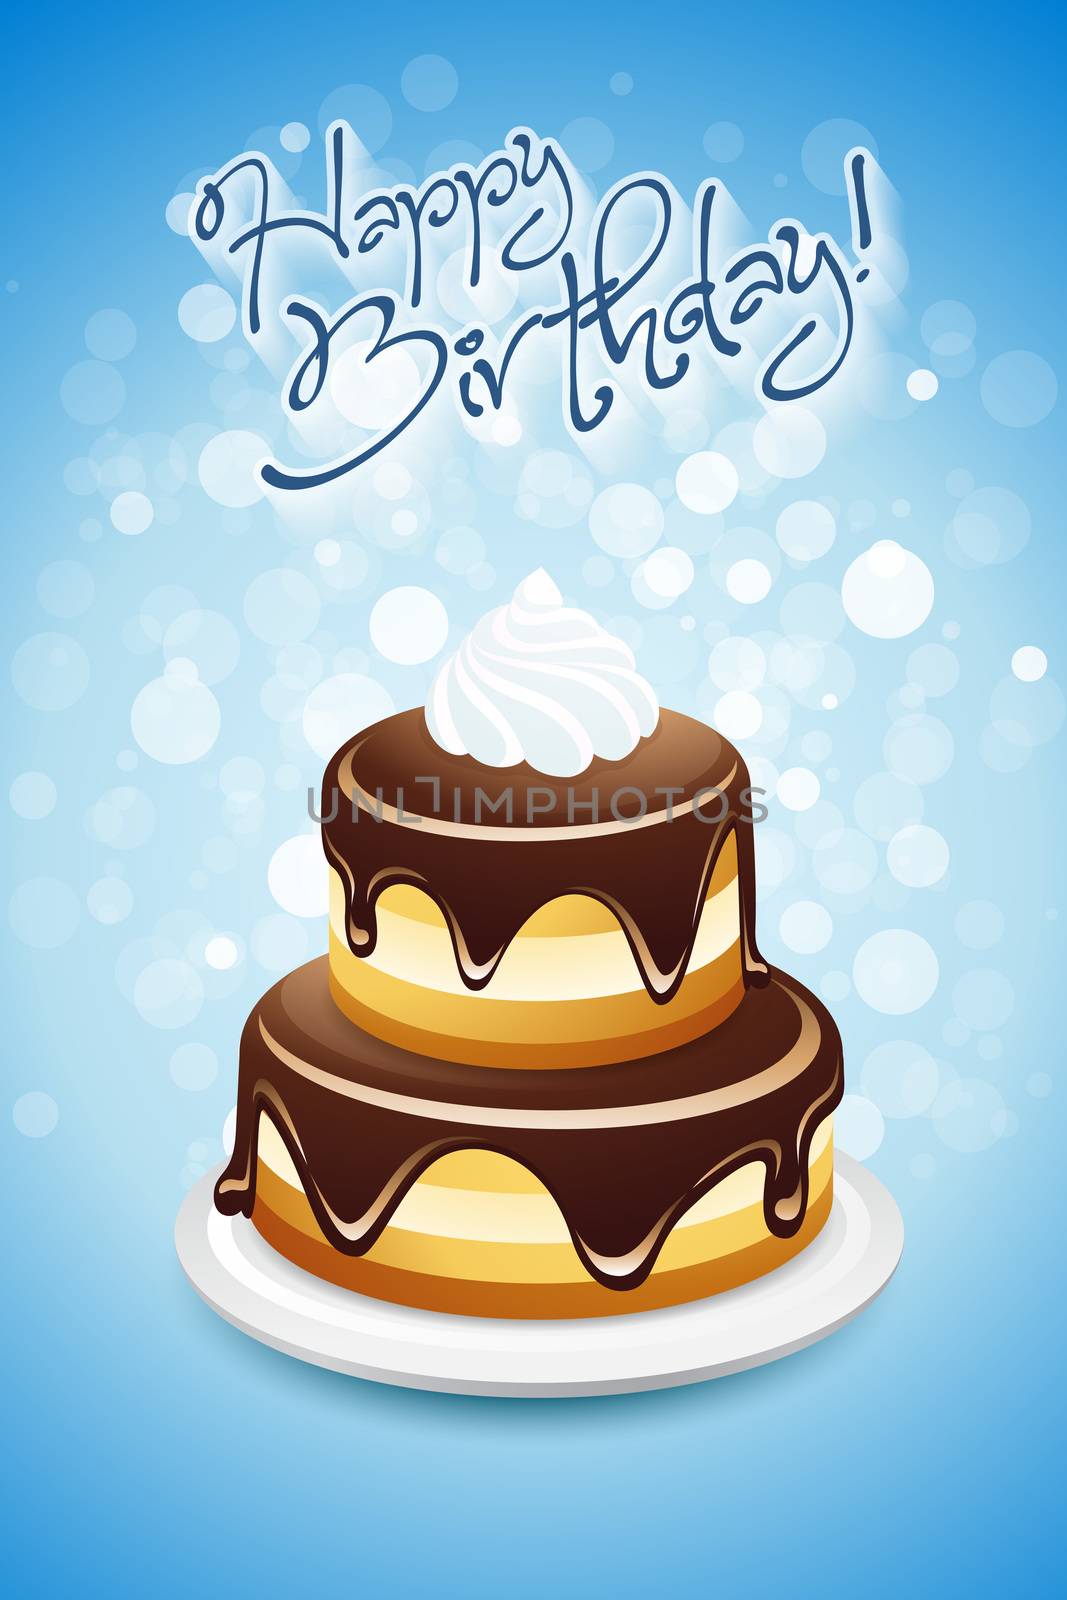 Happy Birthday Card by WaD